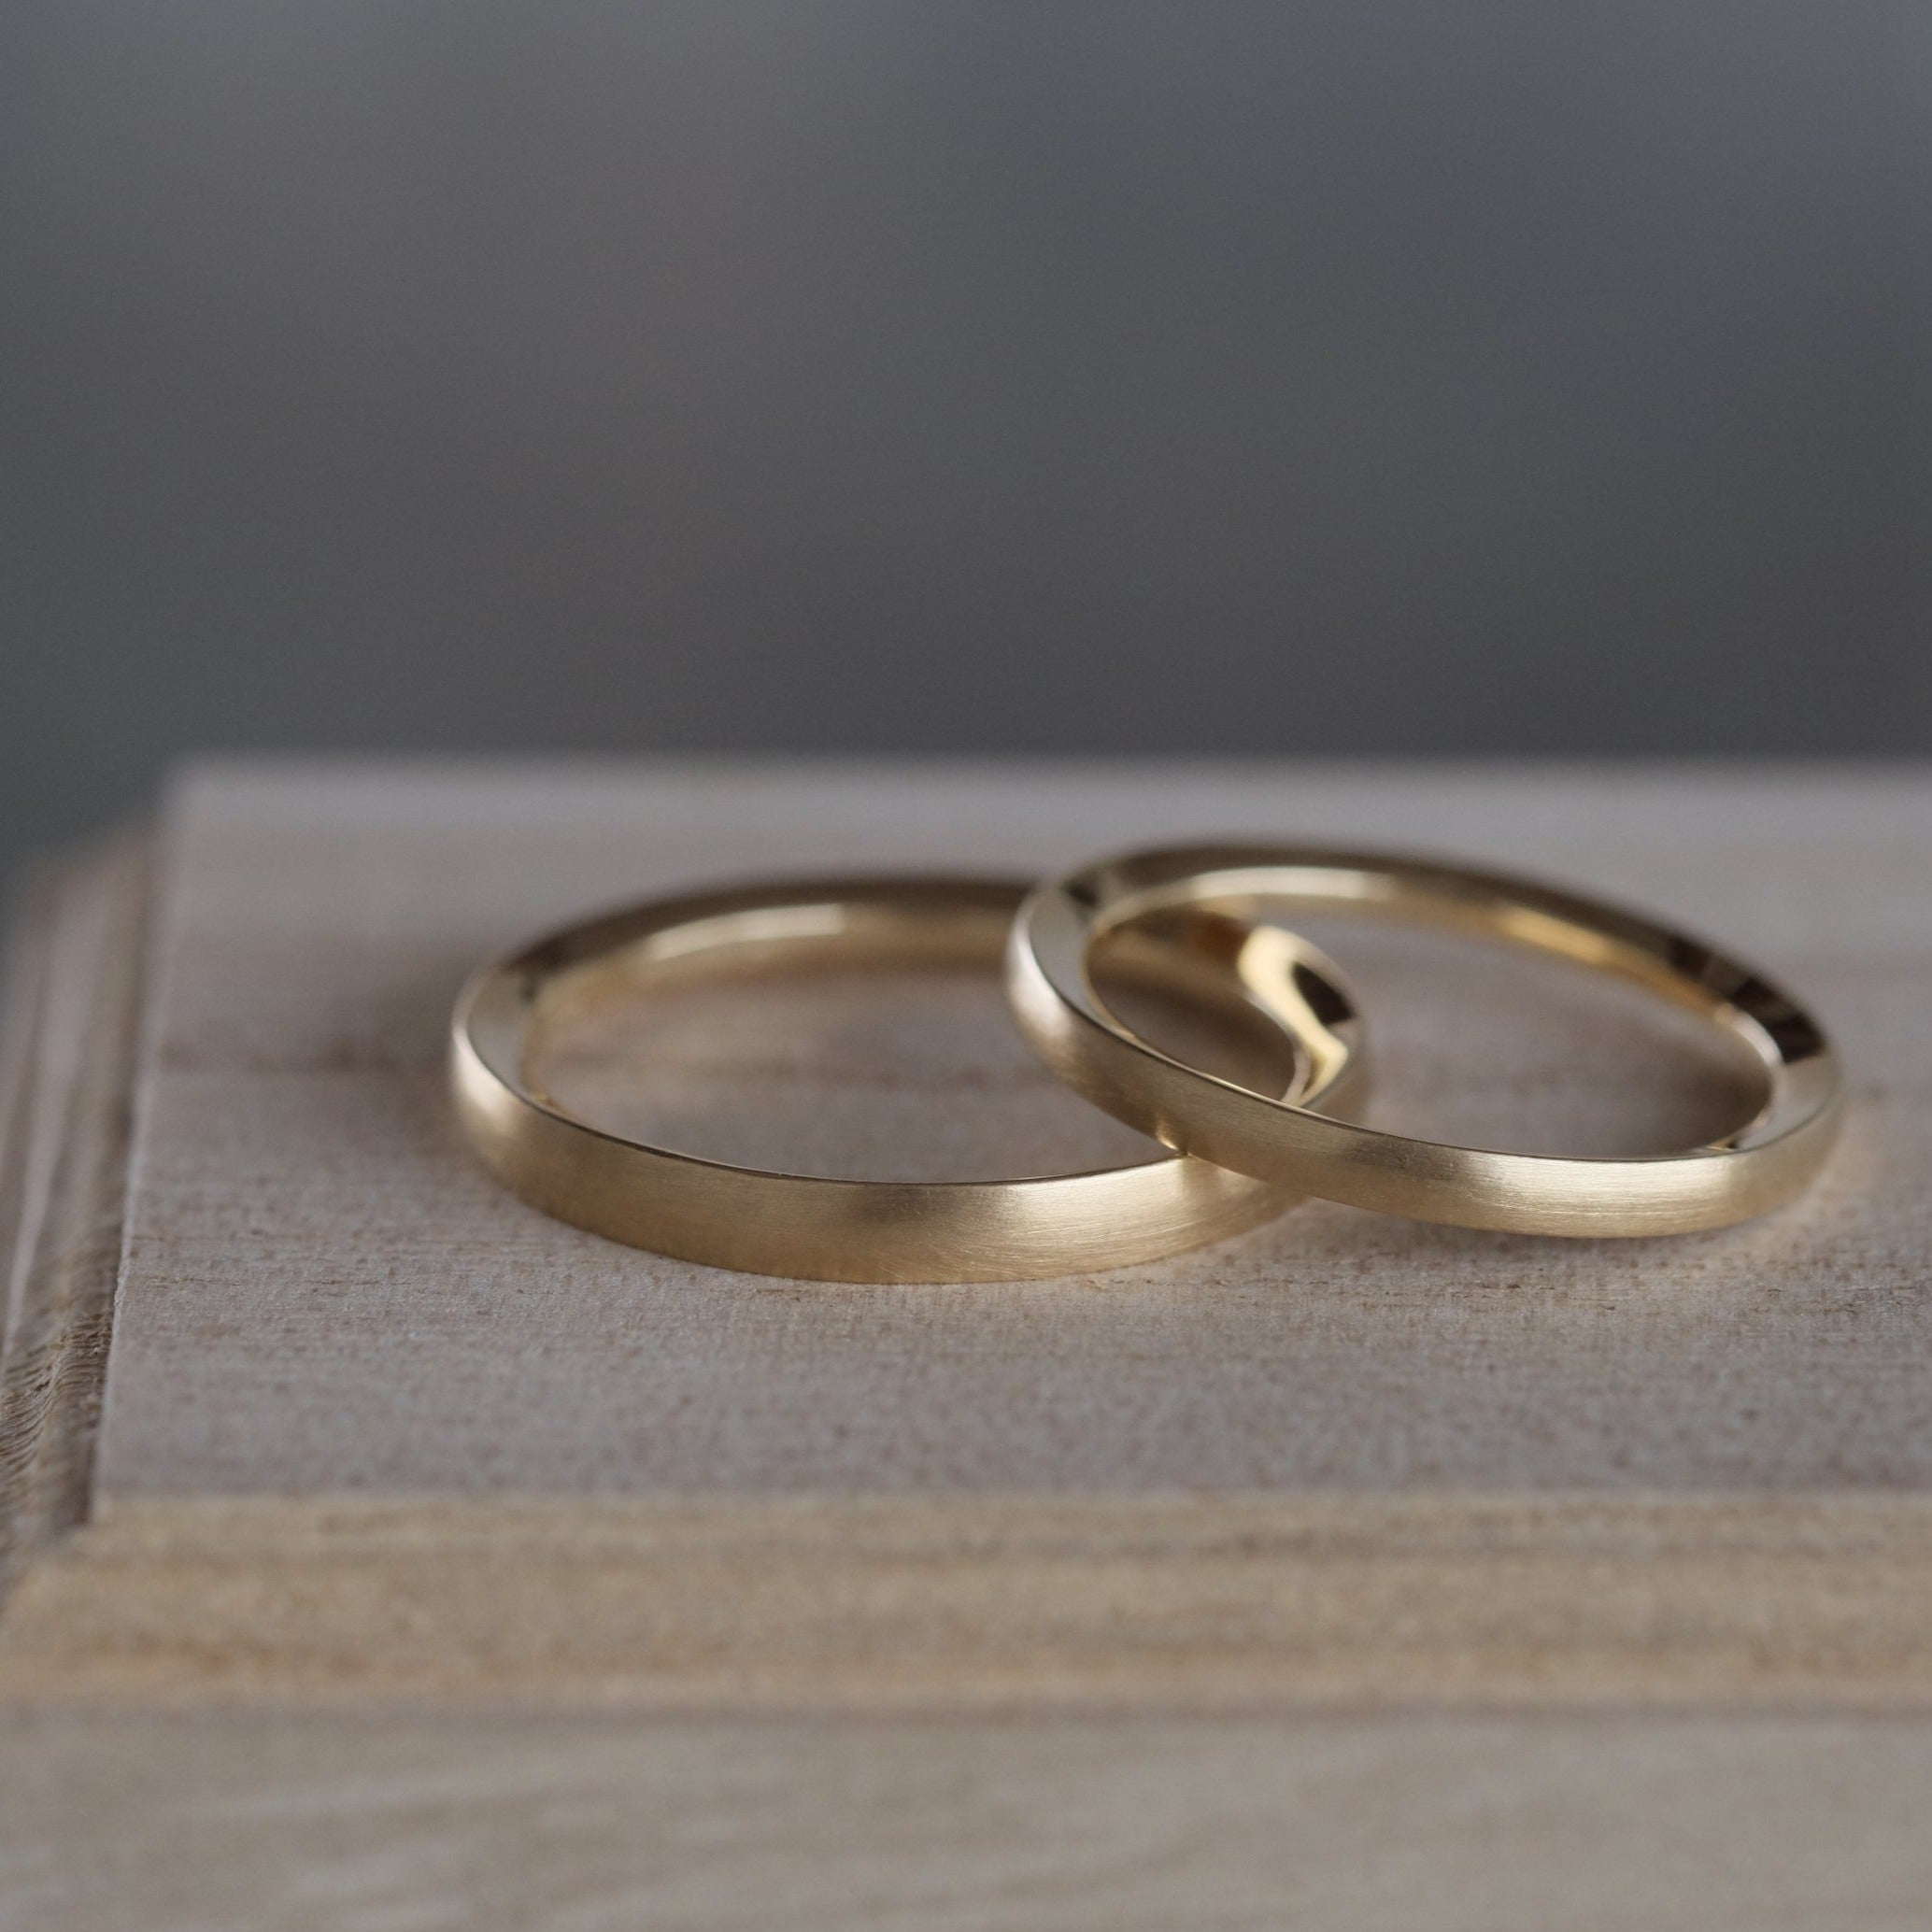 BRIDAL RING［Flaot K18YG/K18YG］結婚指輪（ペア）